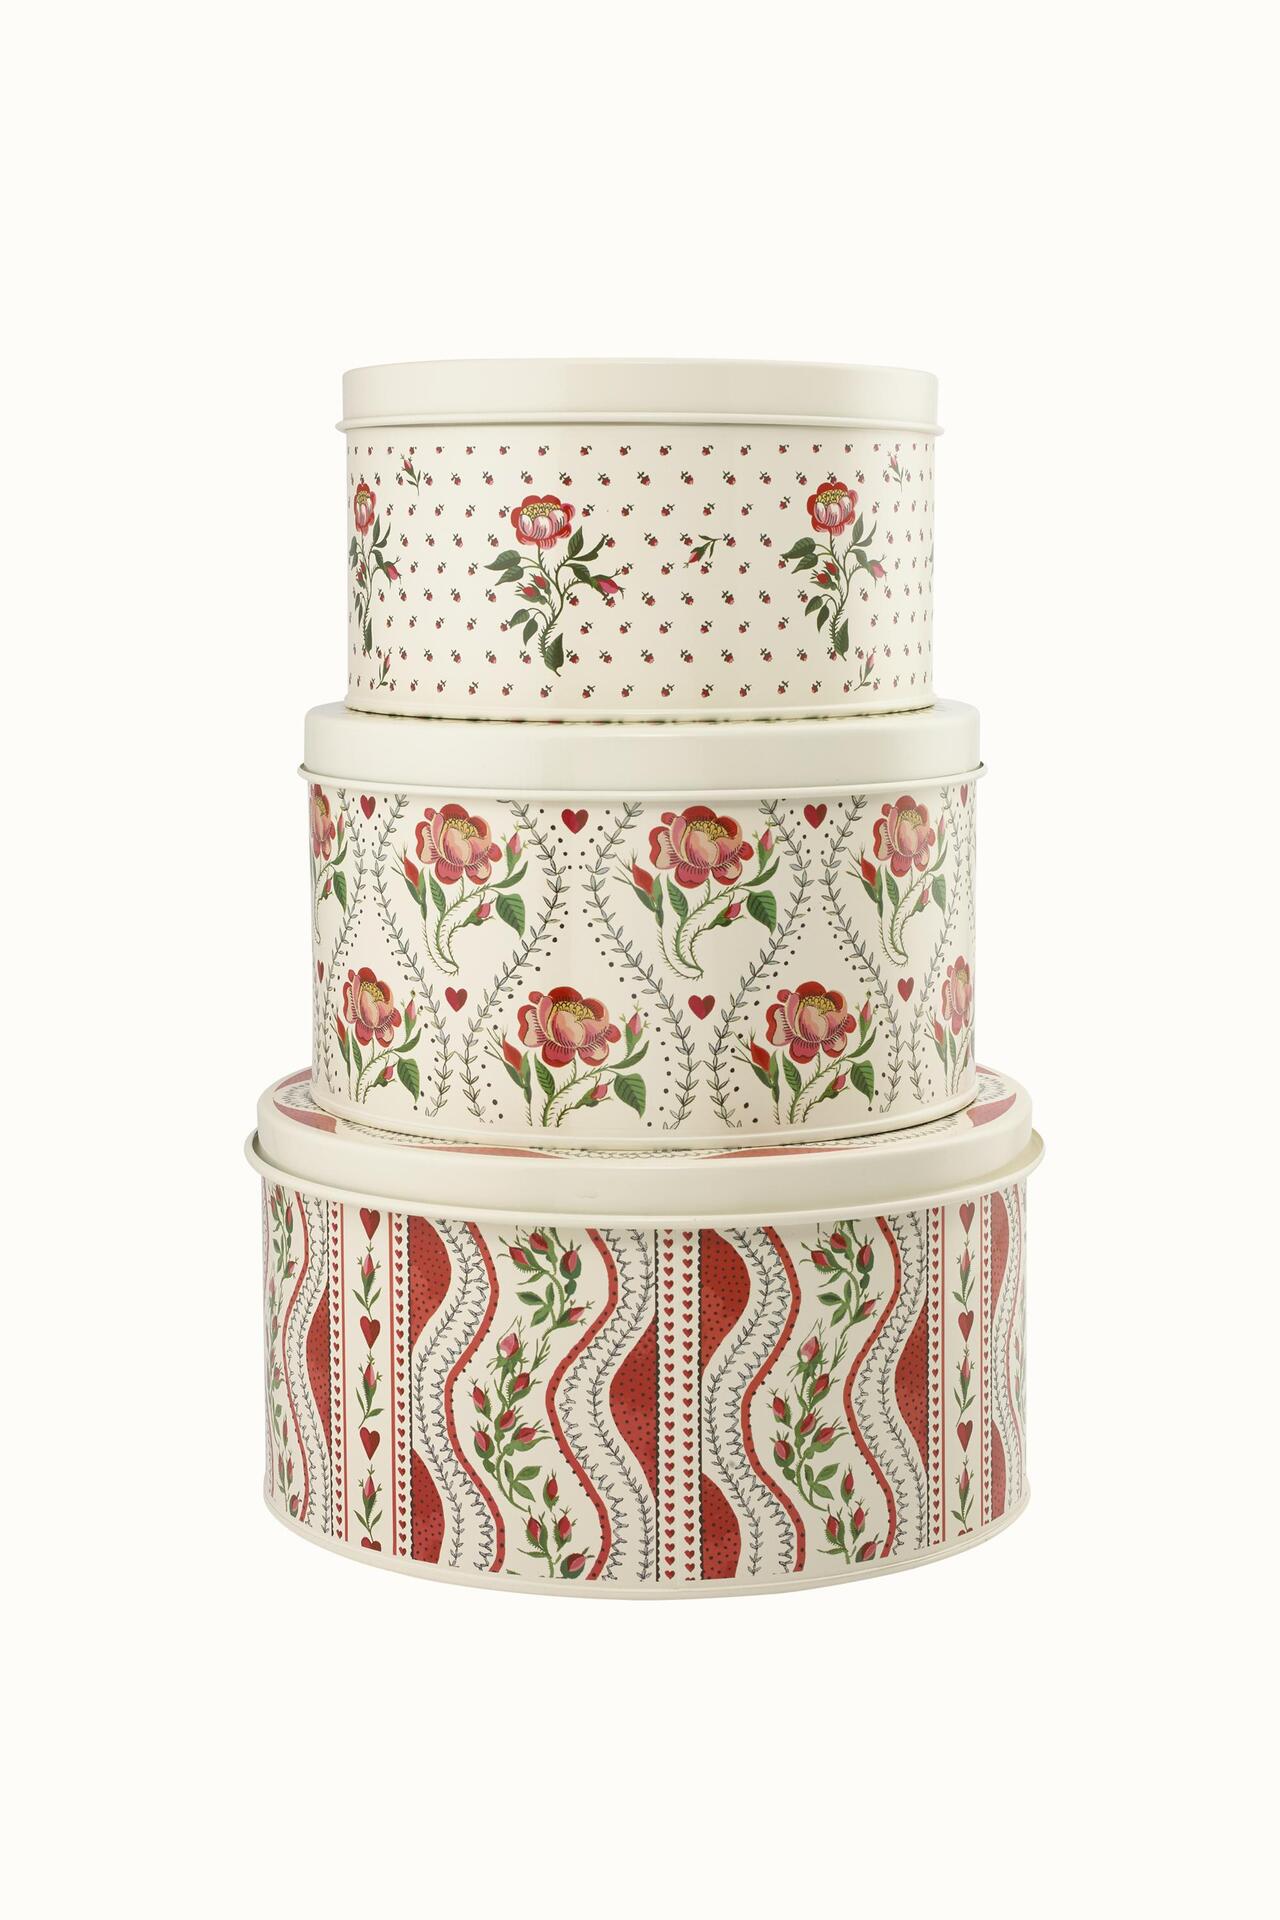 Cath Kidston Cherished Set of Three Cake Tins in Cream